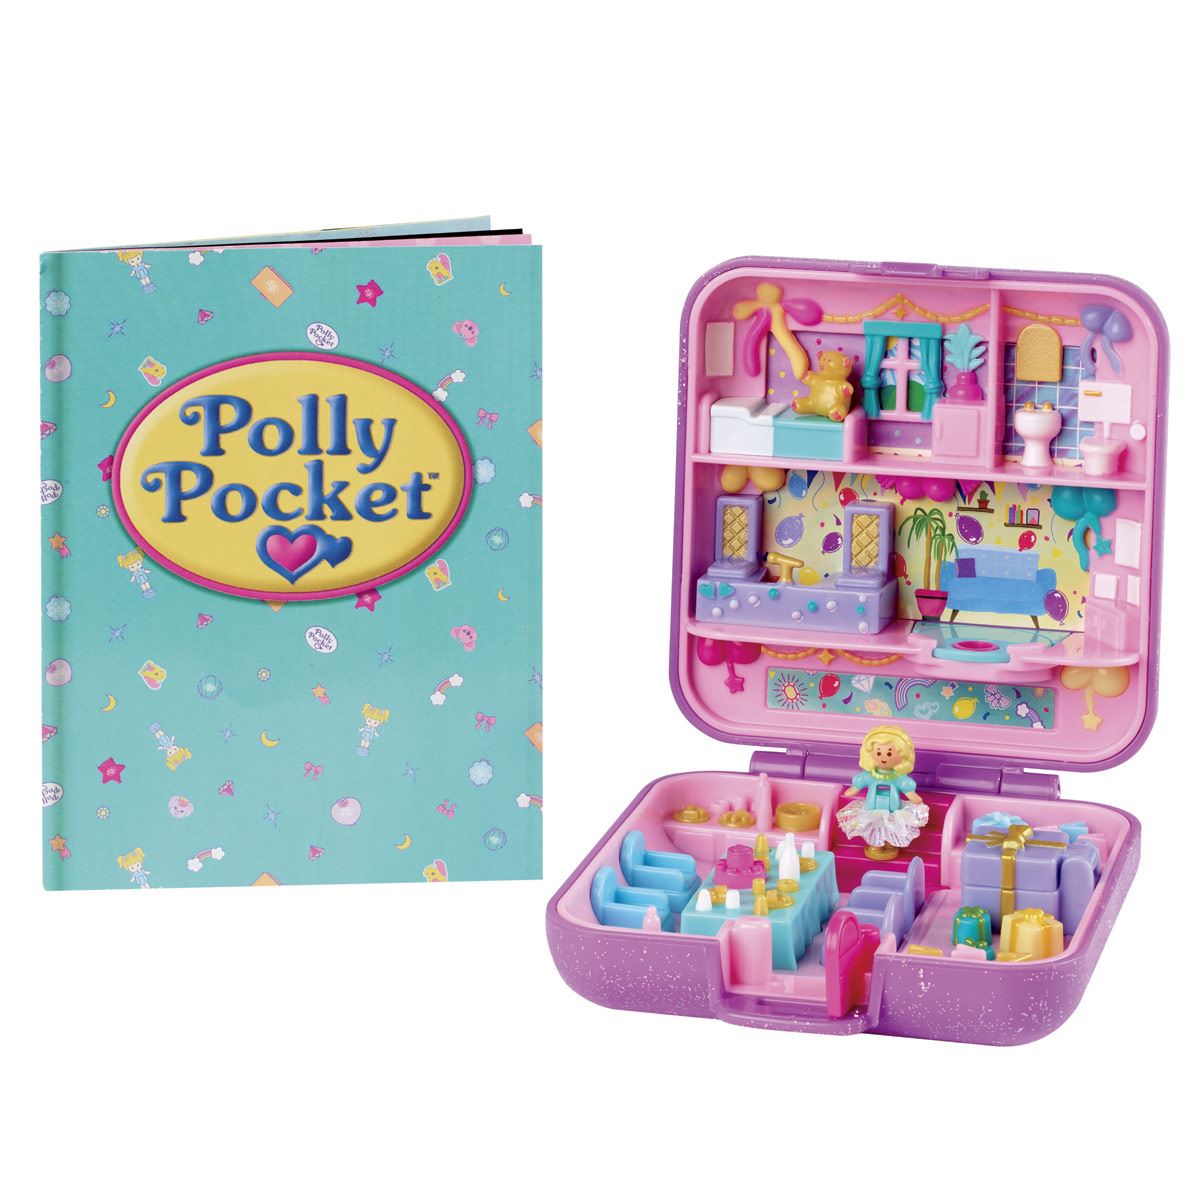 Polly Pocket Edicion Limitada 3